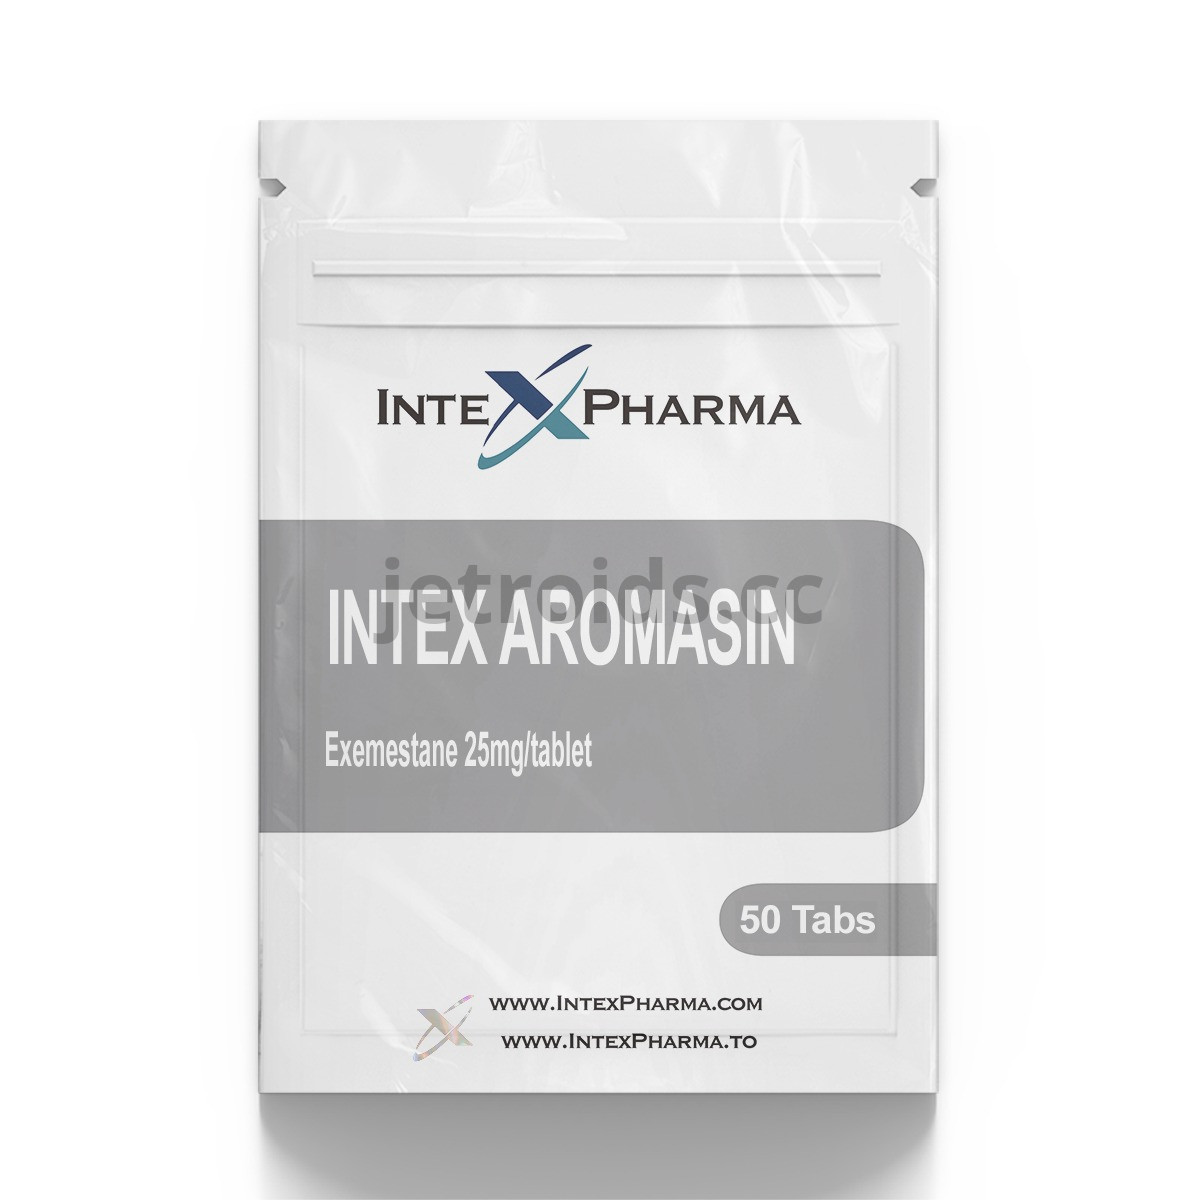 IntexPharma Intex Aromasin Product Info